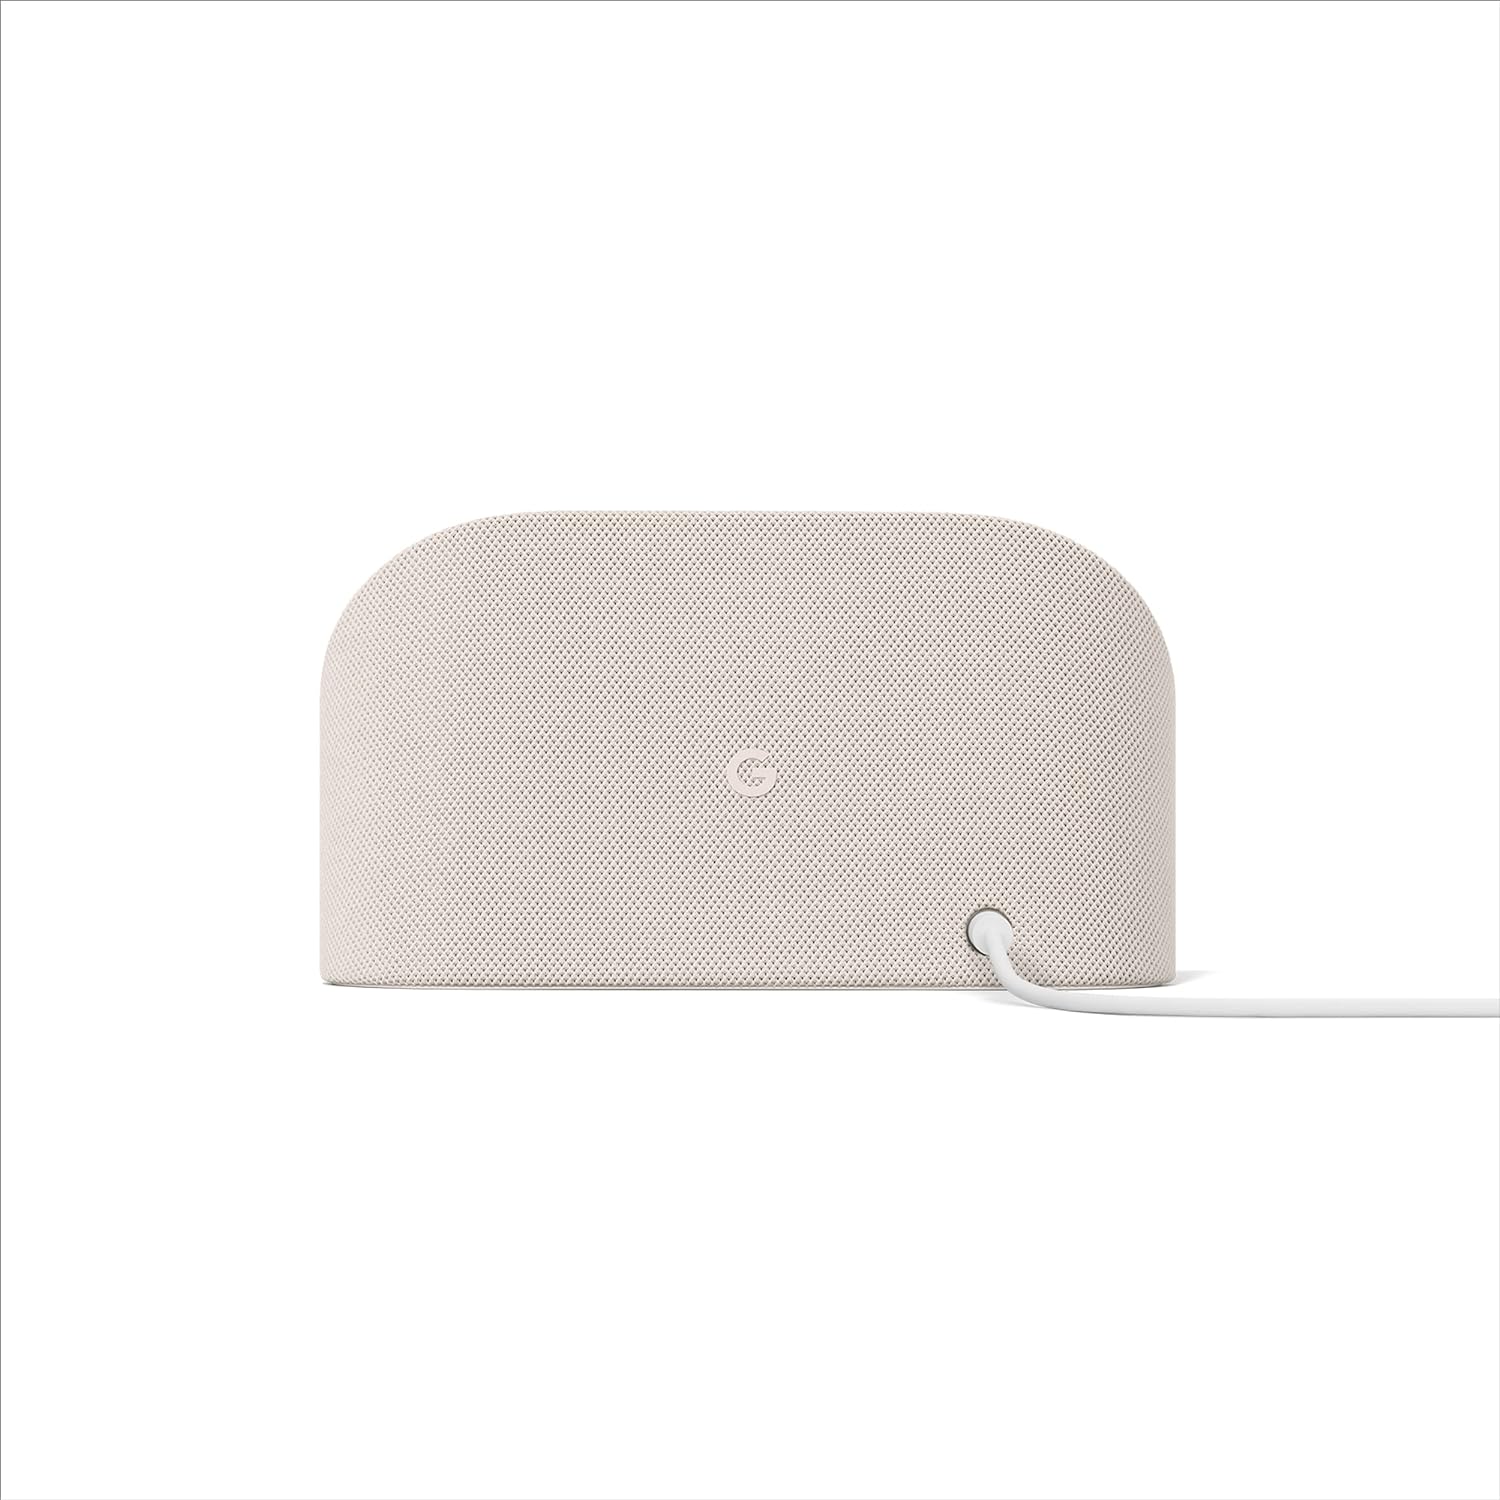 Google Pixel Tablet Charging Speaker Dock - Android Tablet Dock with Full-Range Speaker - Porcelain